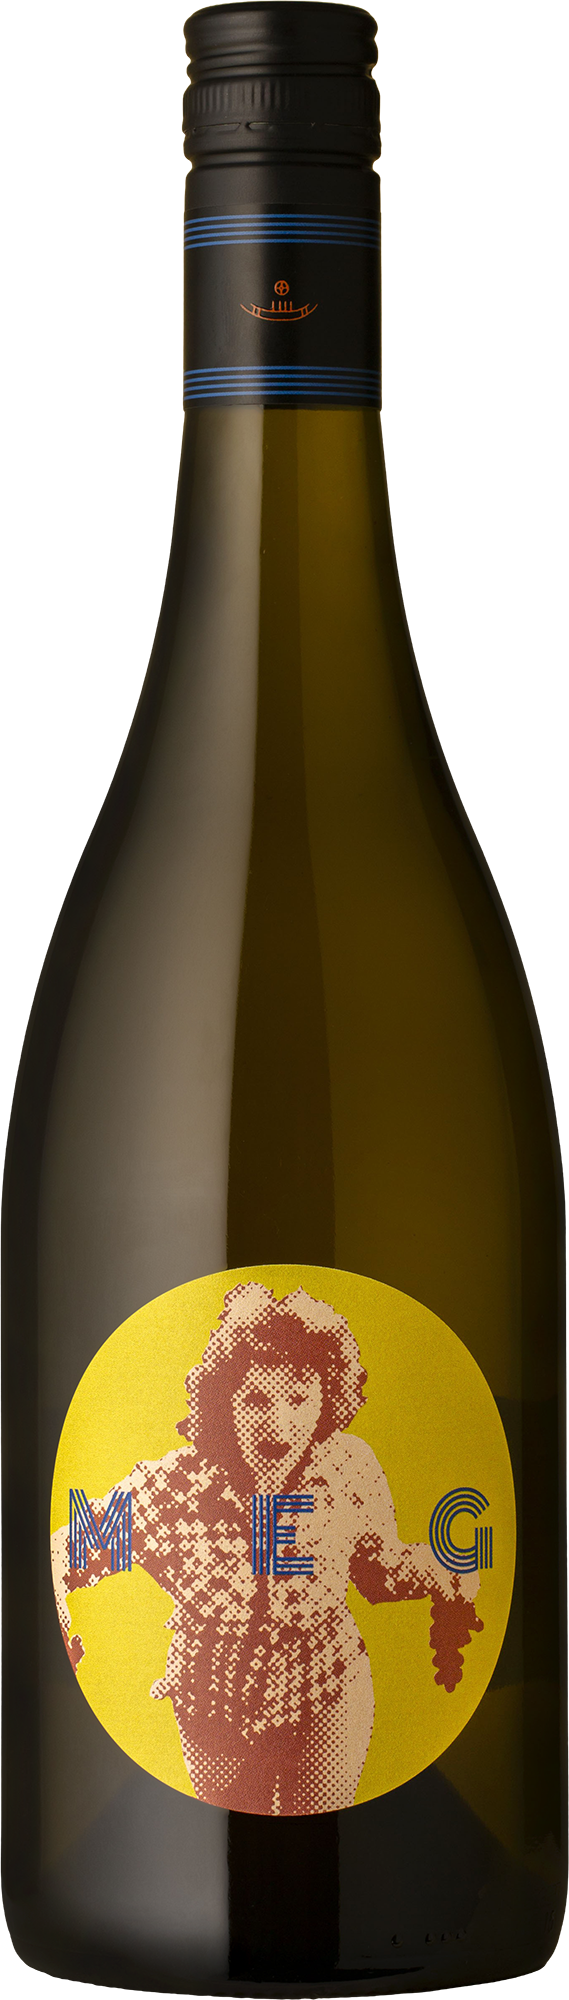 Sigurd - MEG White Blend 2022 White Wine